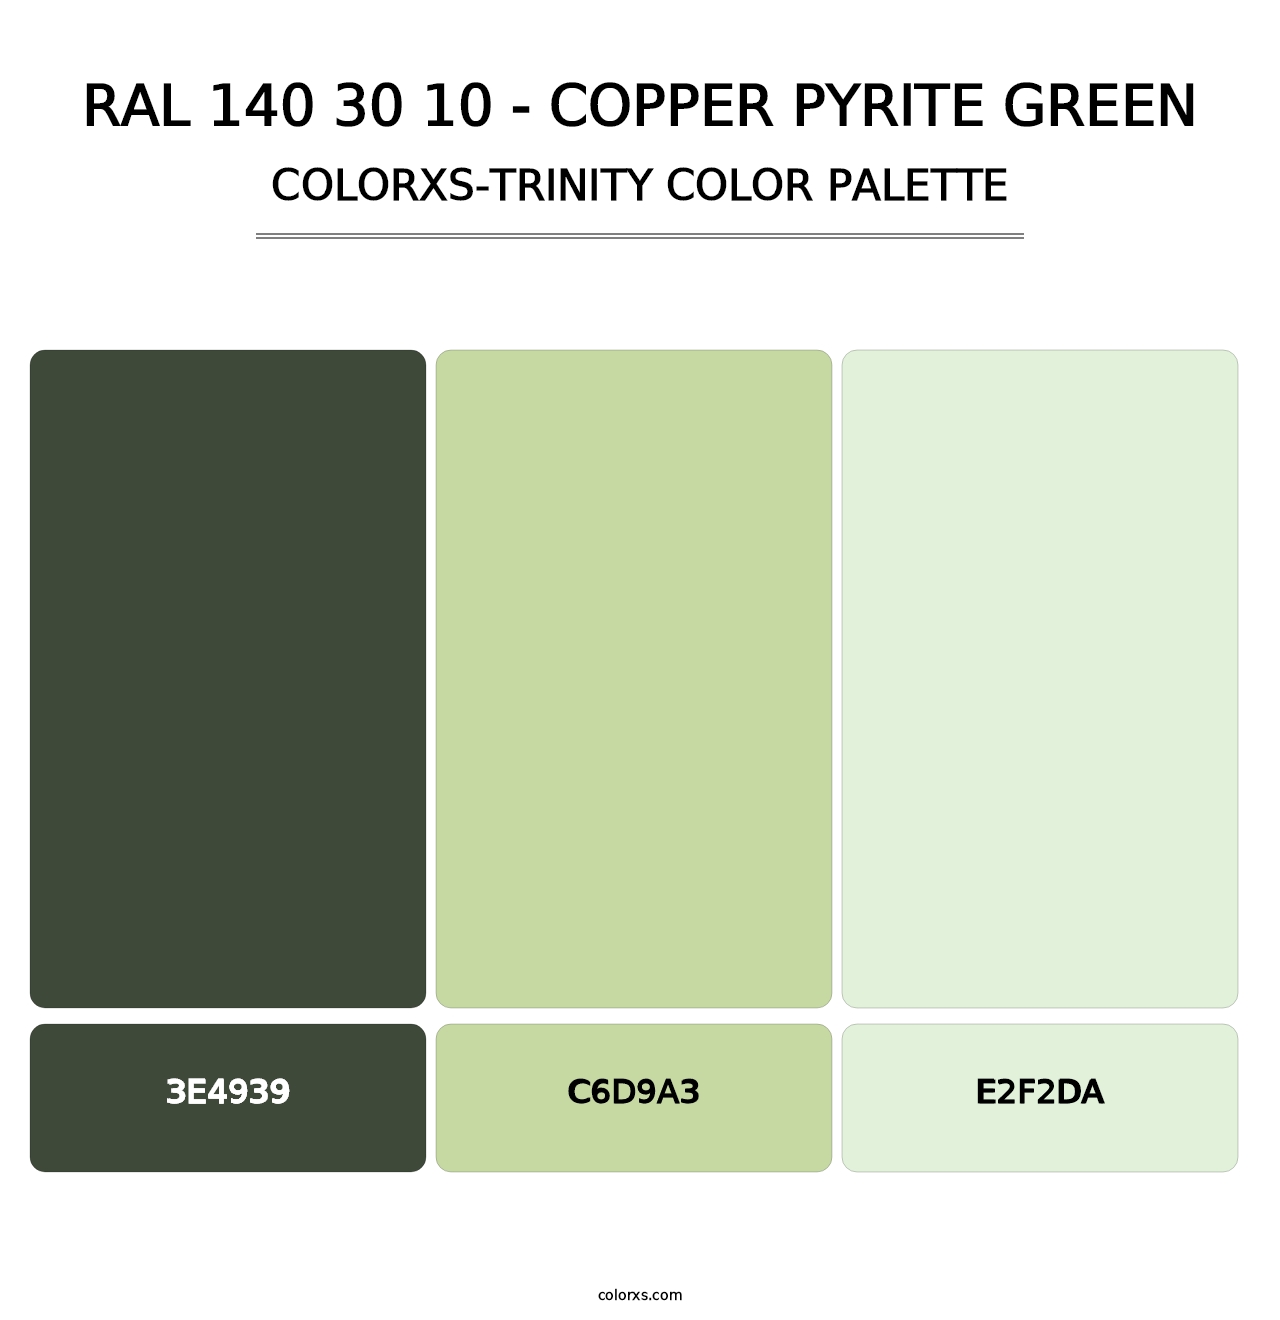 RAL 140 30 10 - Copper Pyrite Green - Colorxs Trinity Palette